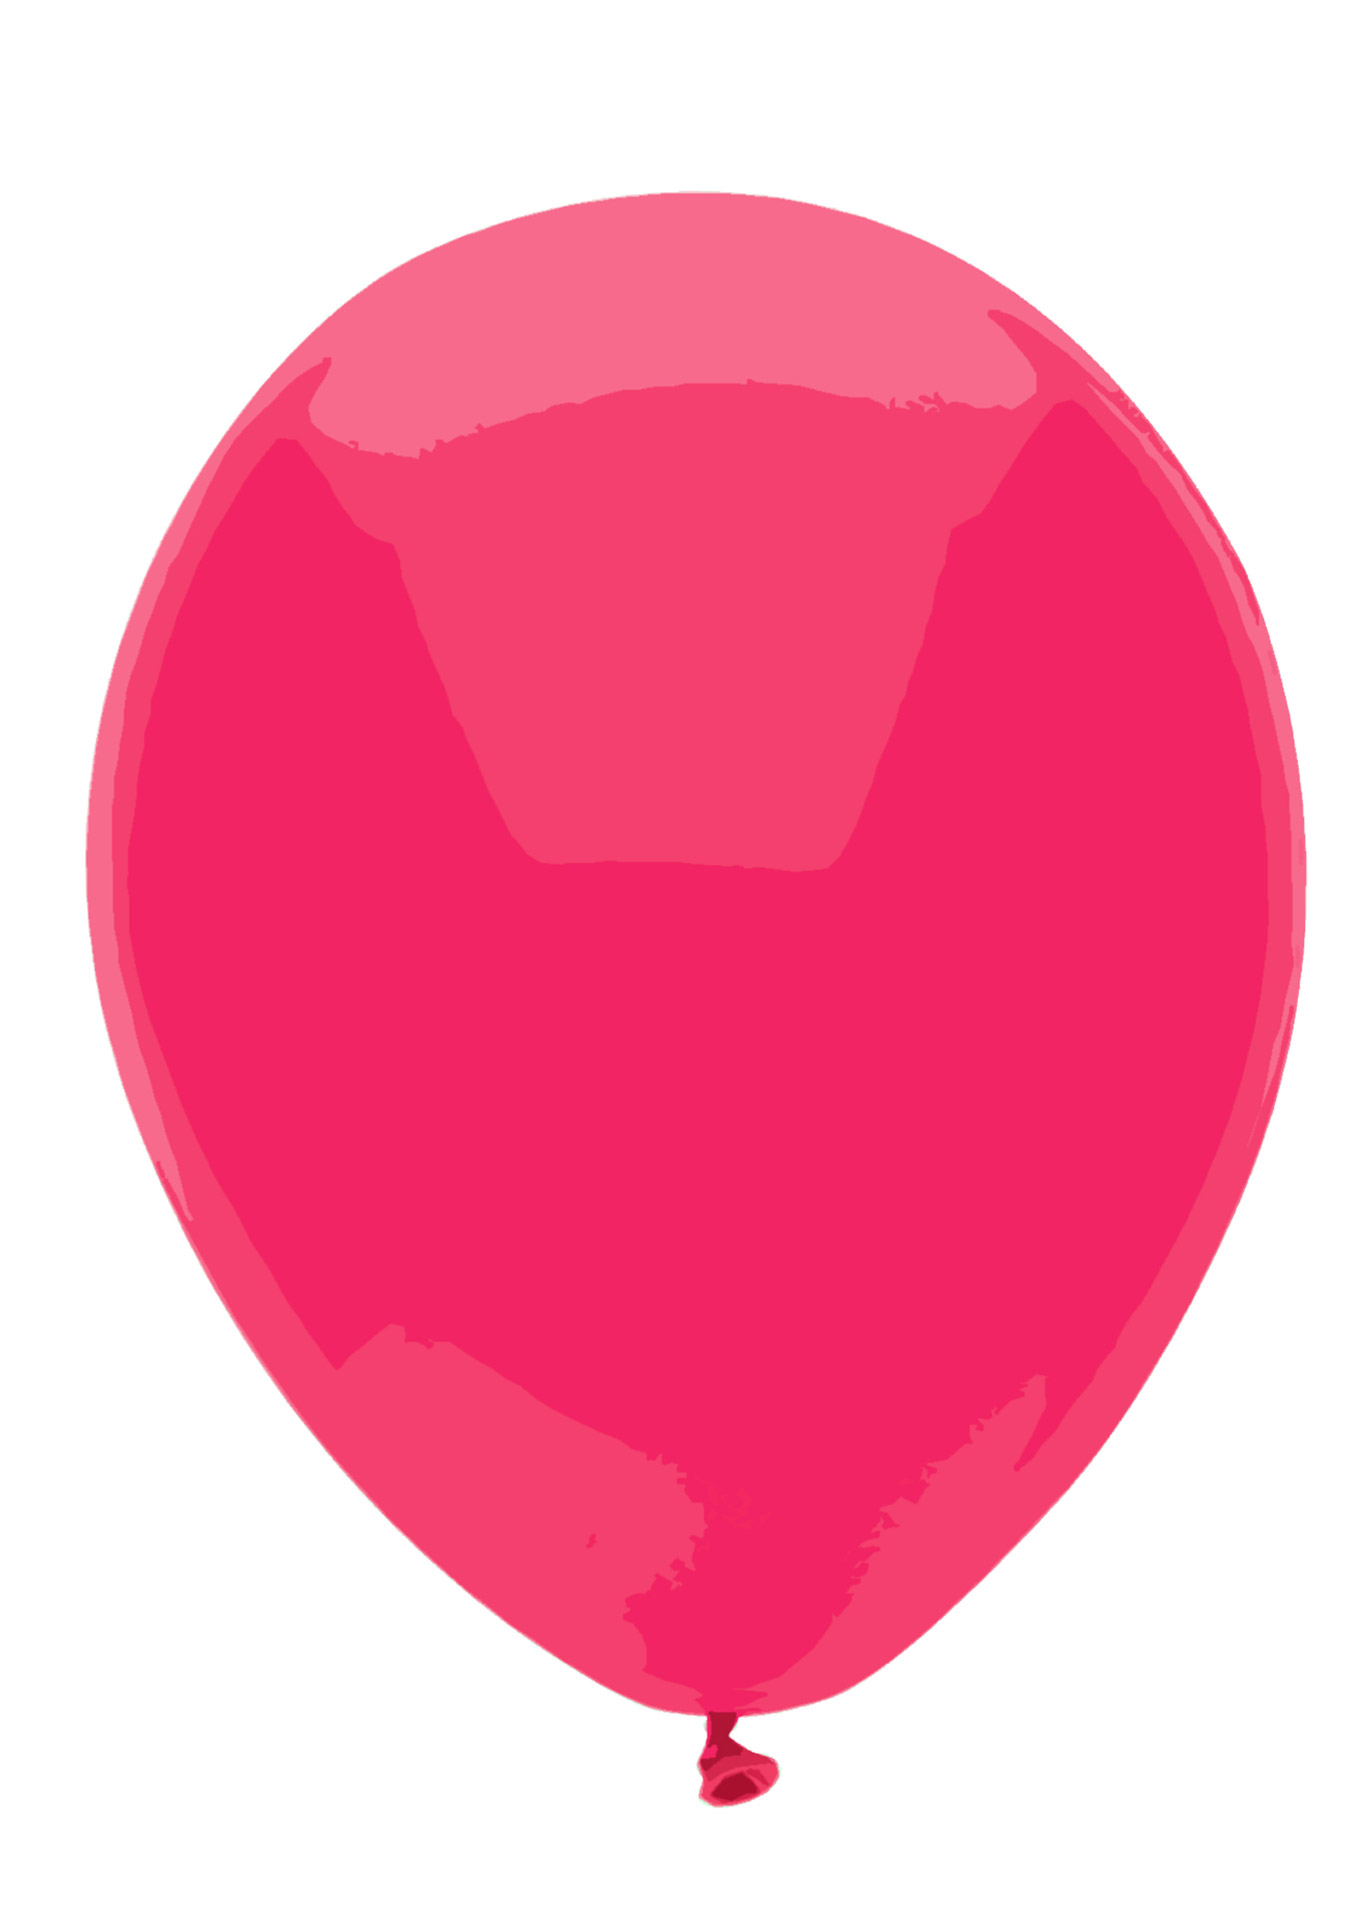 clip art pink balloons - photo #22